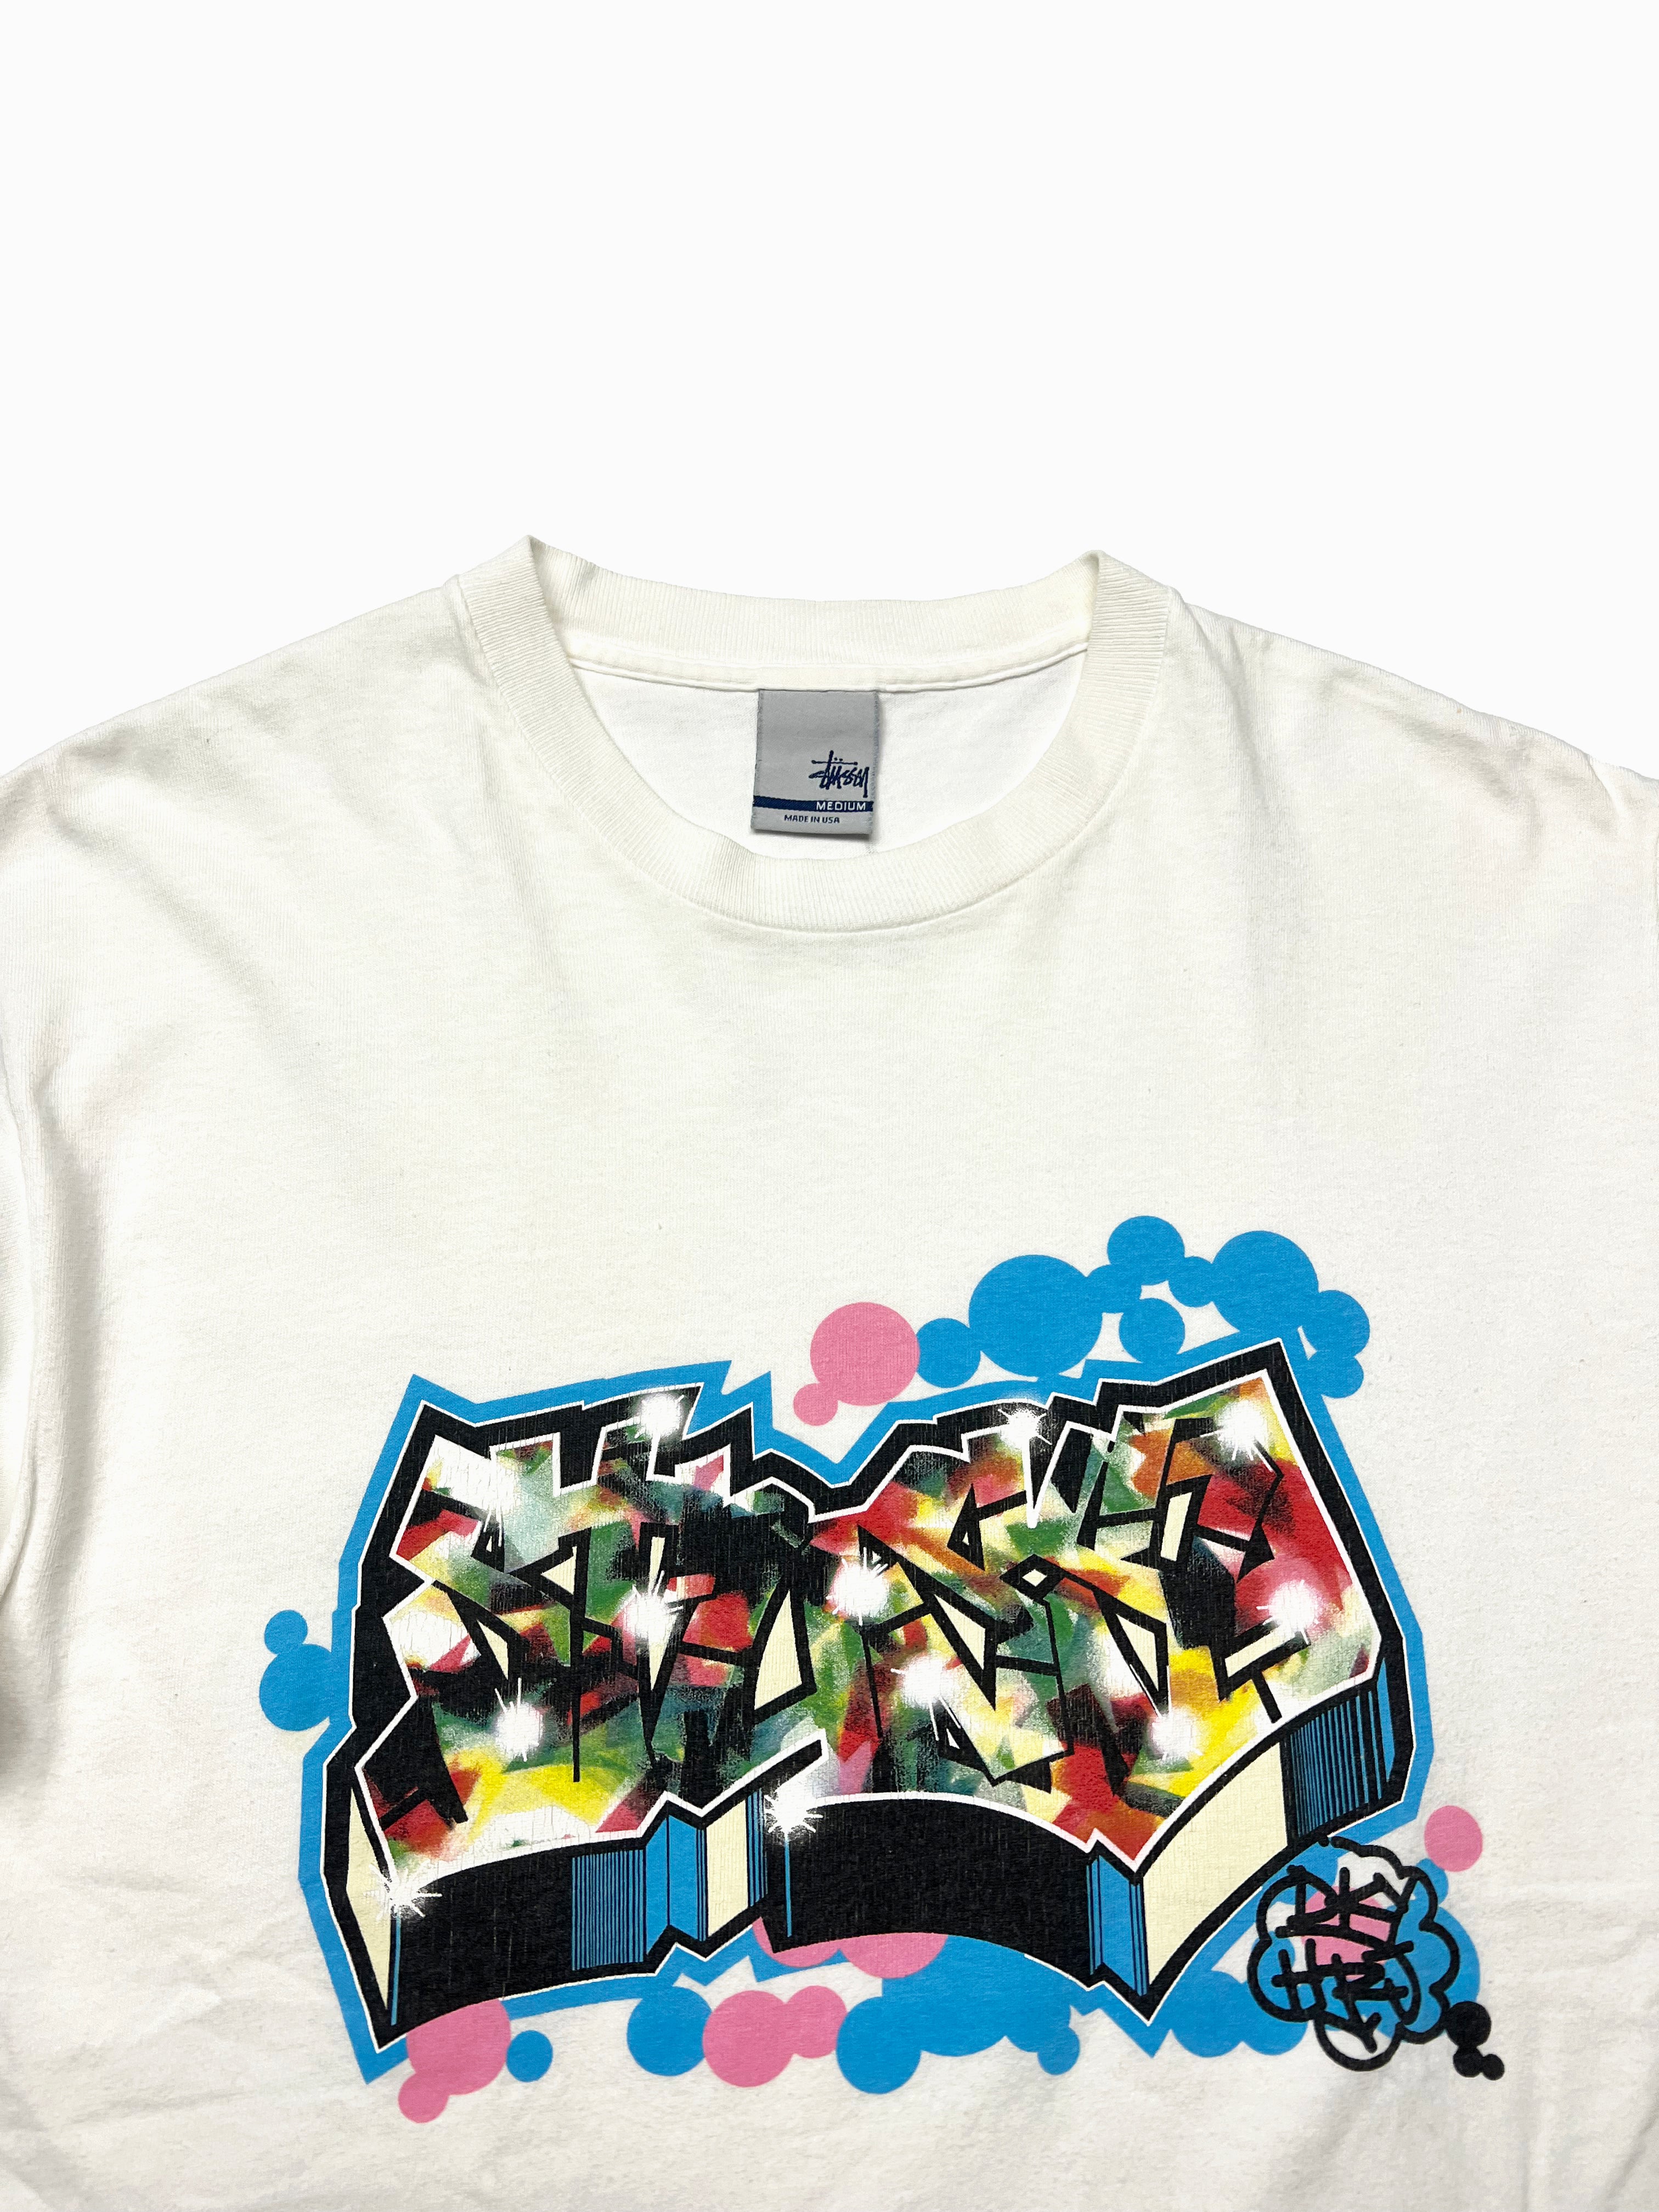 Stussy Graffiti T-shirt 00's